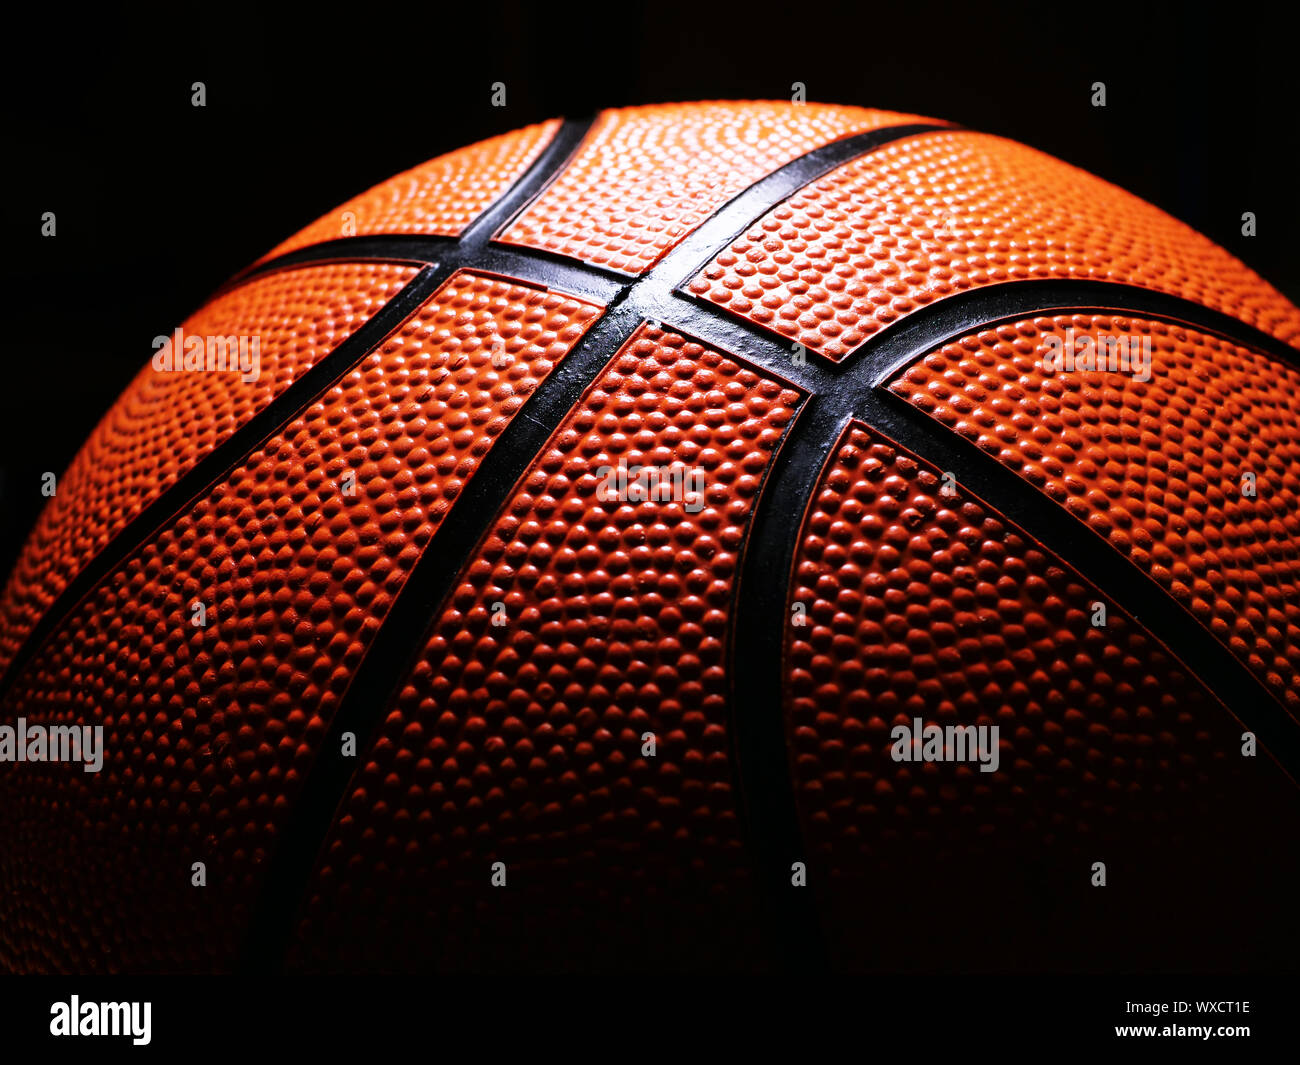 Basketball close up image Stock Photo